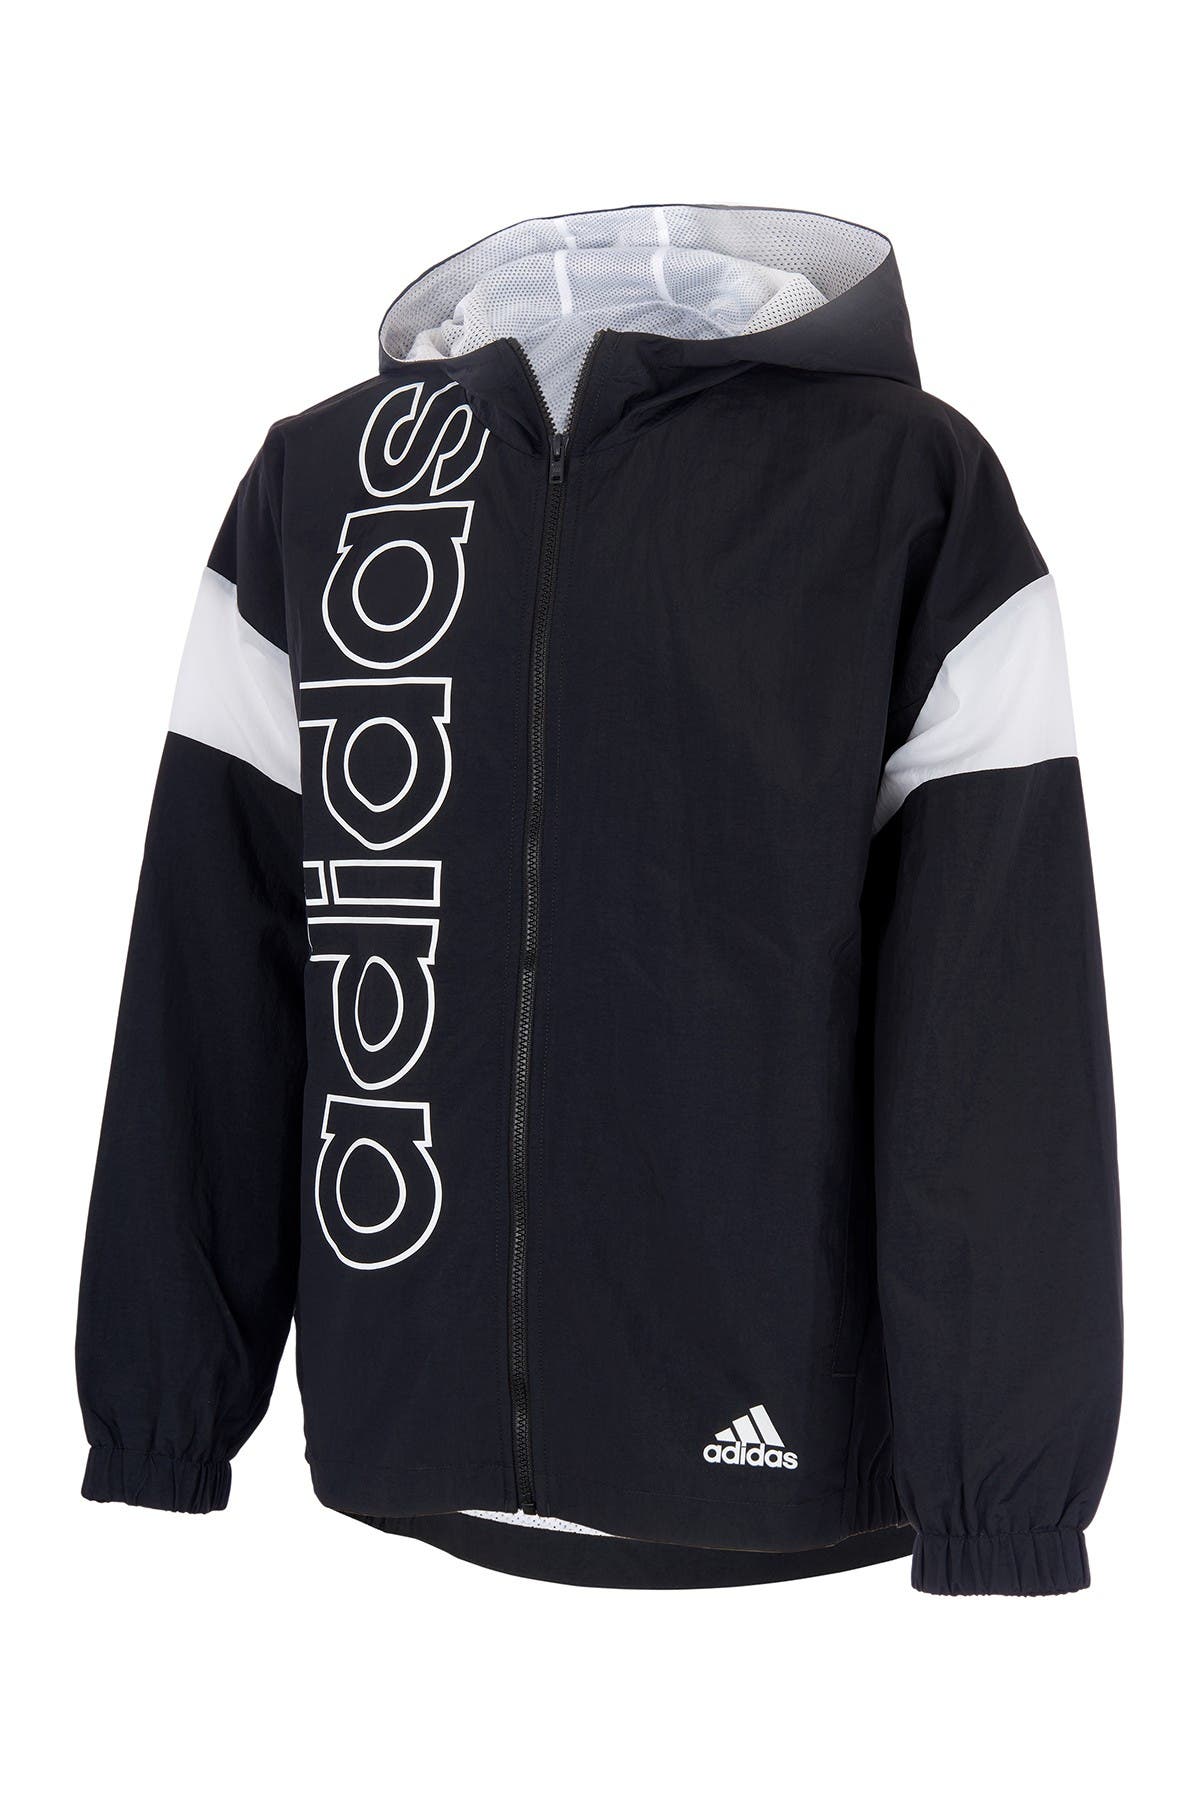 adidas front zip hooded jacket